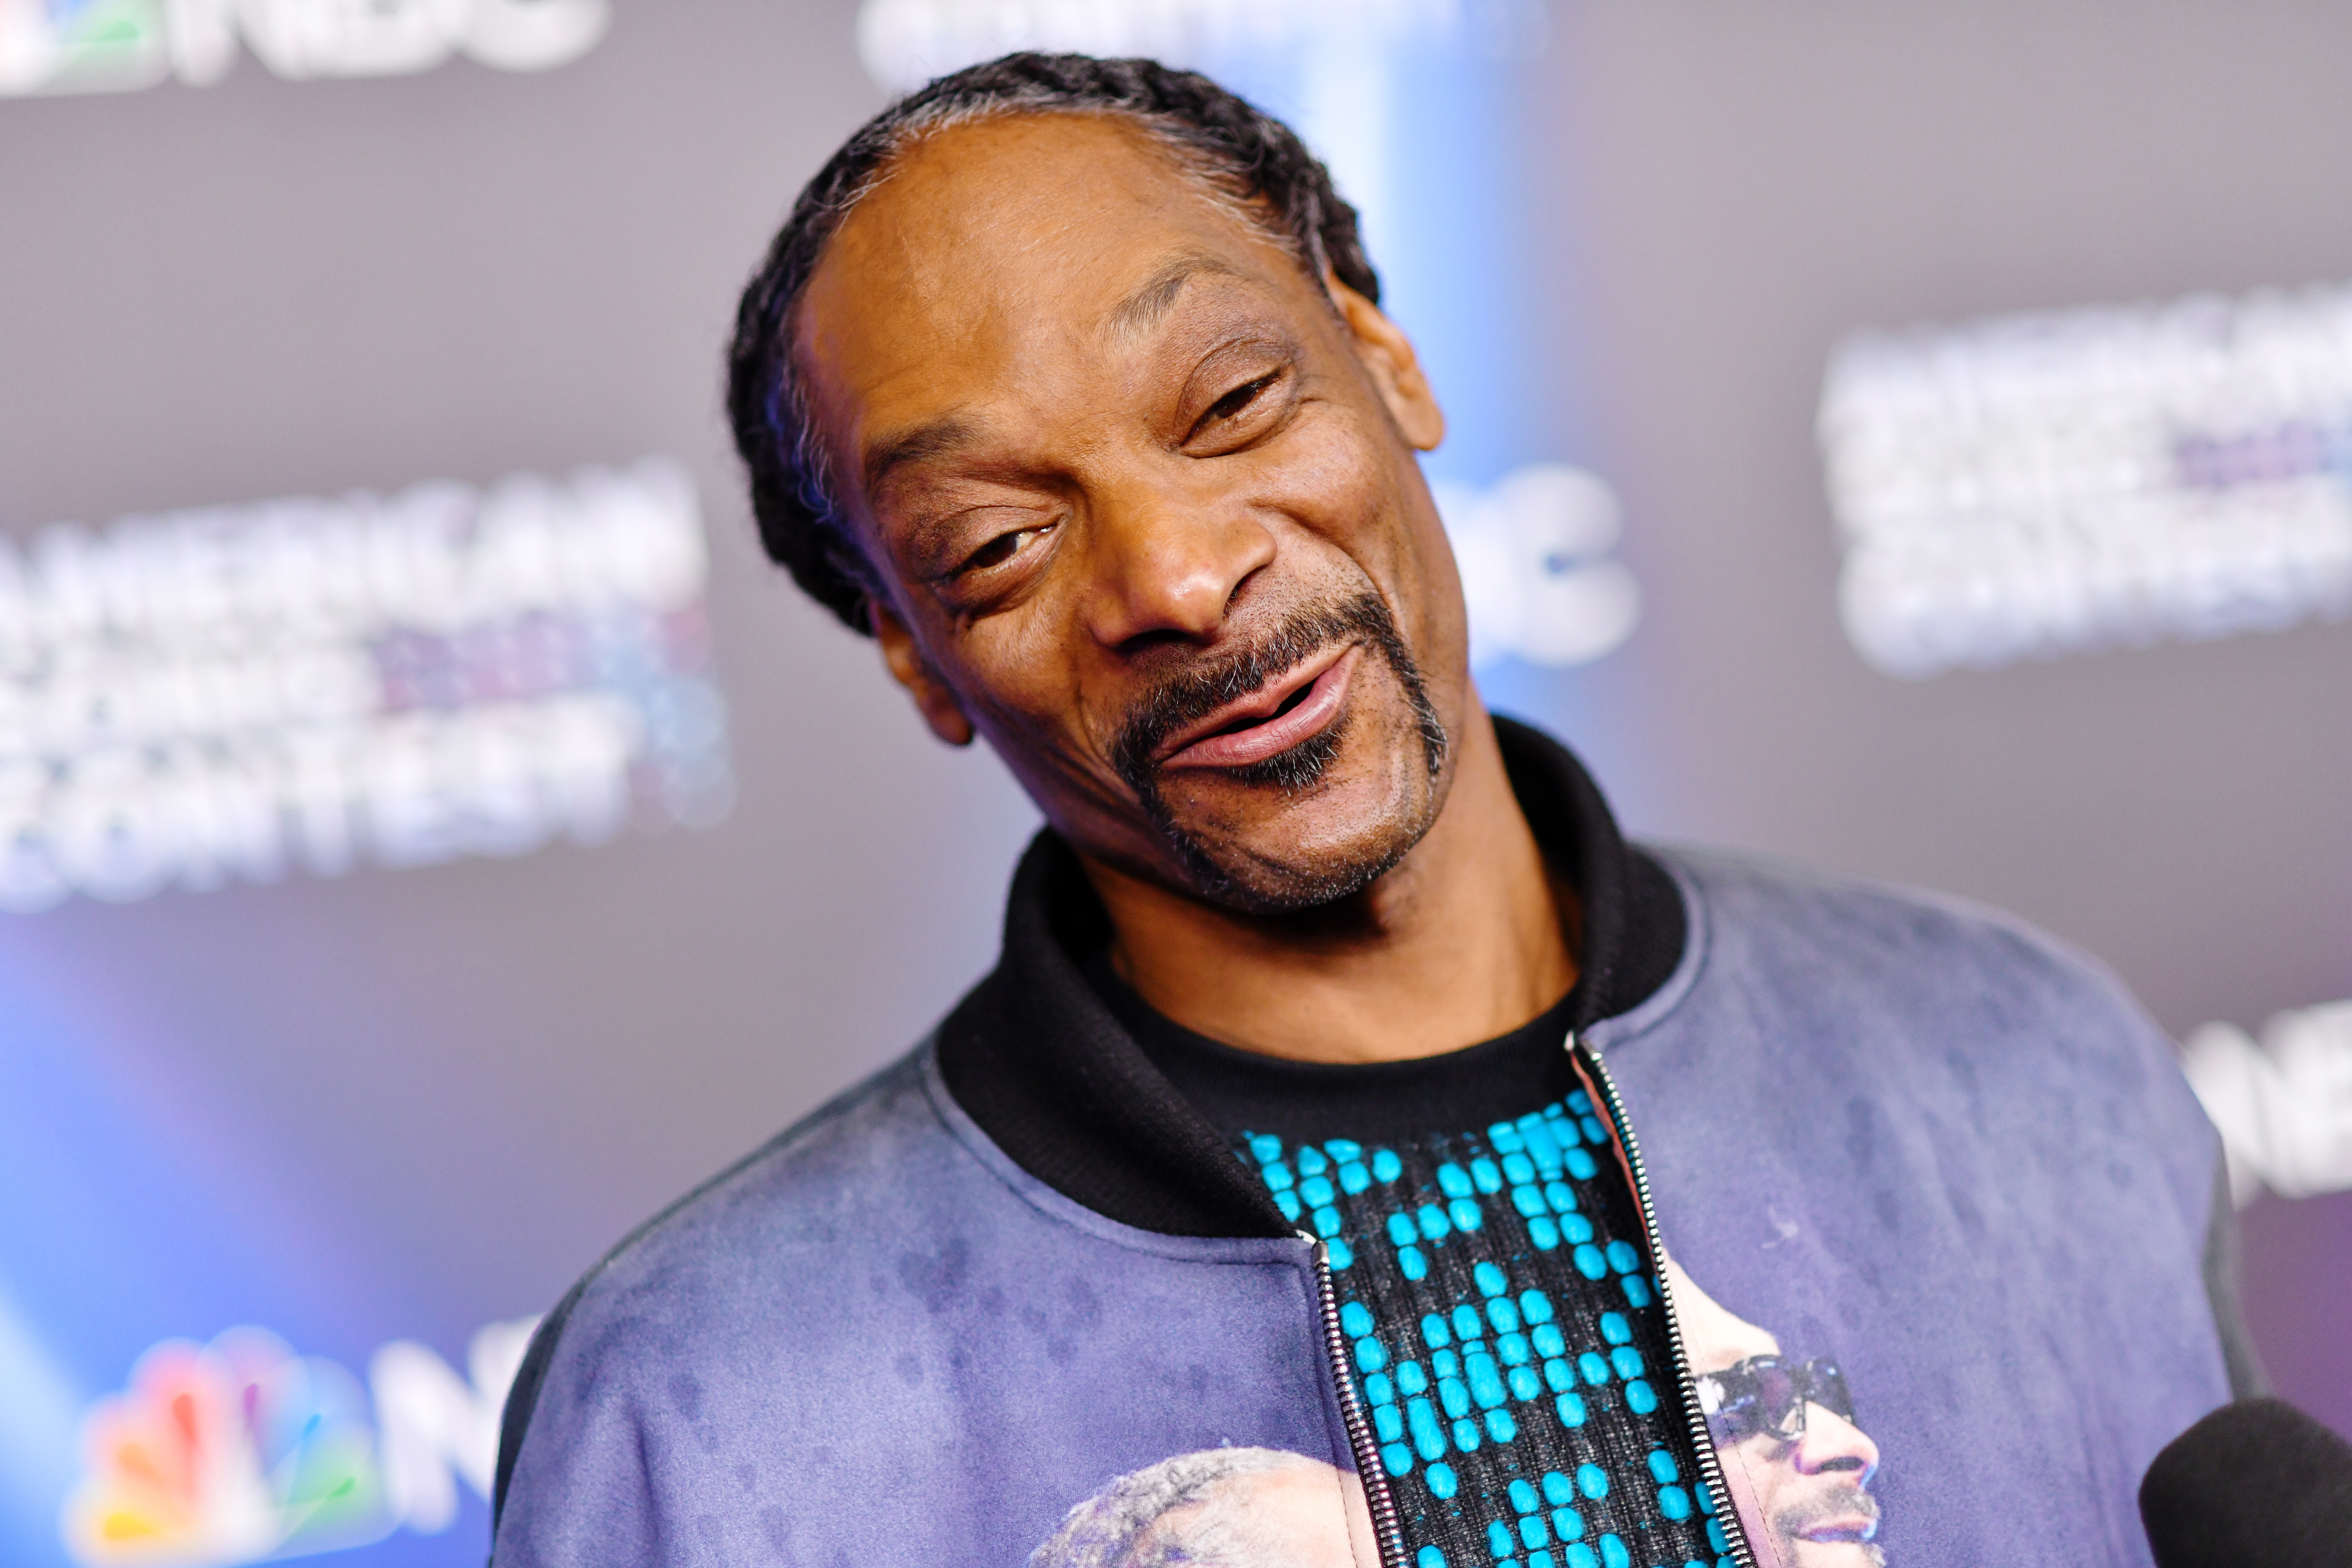 Snoop Dogg Cancels Remaining 2022 International Tour Dates